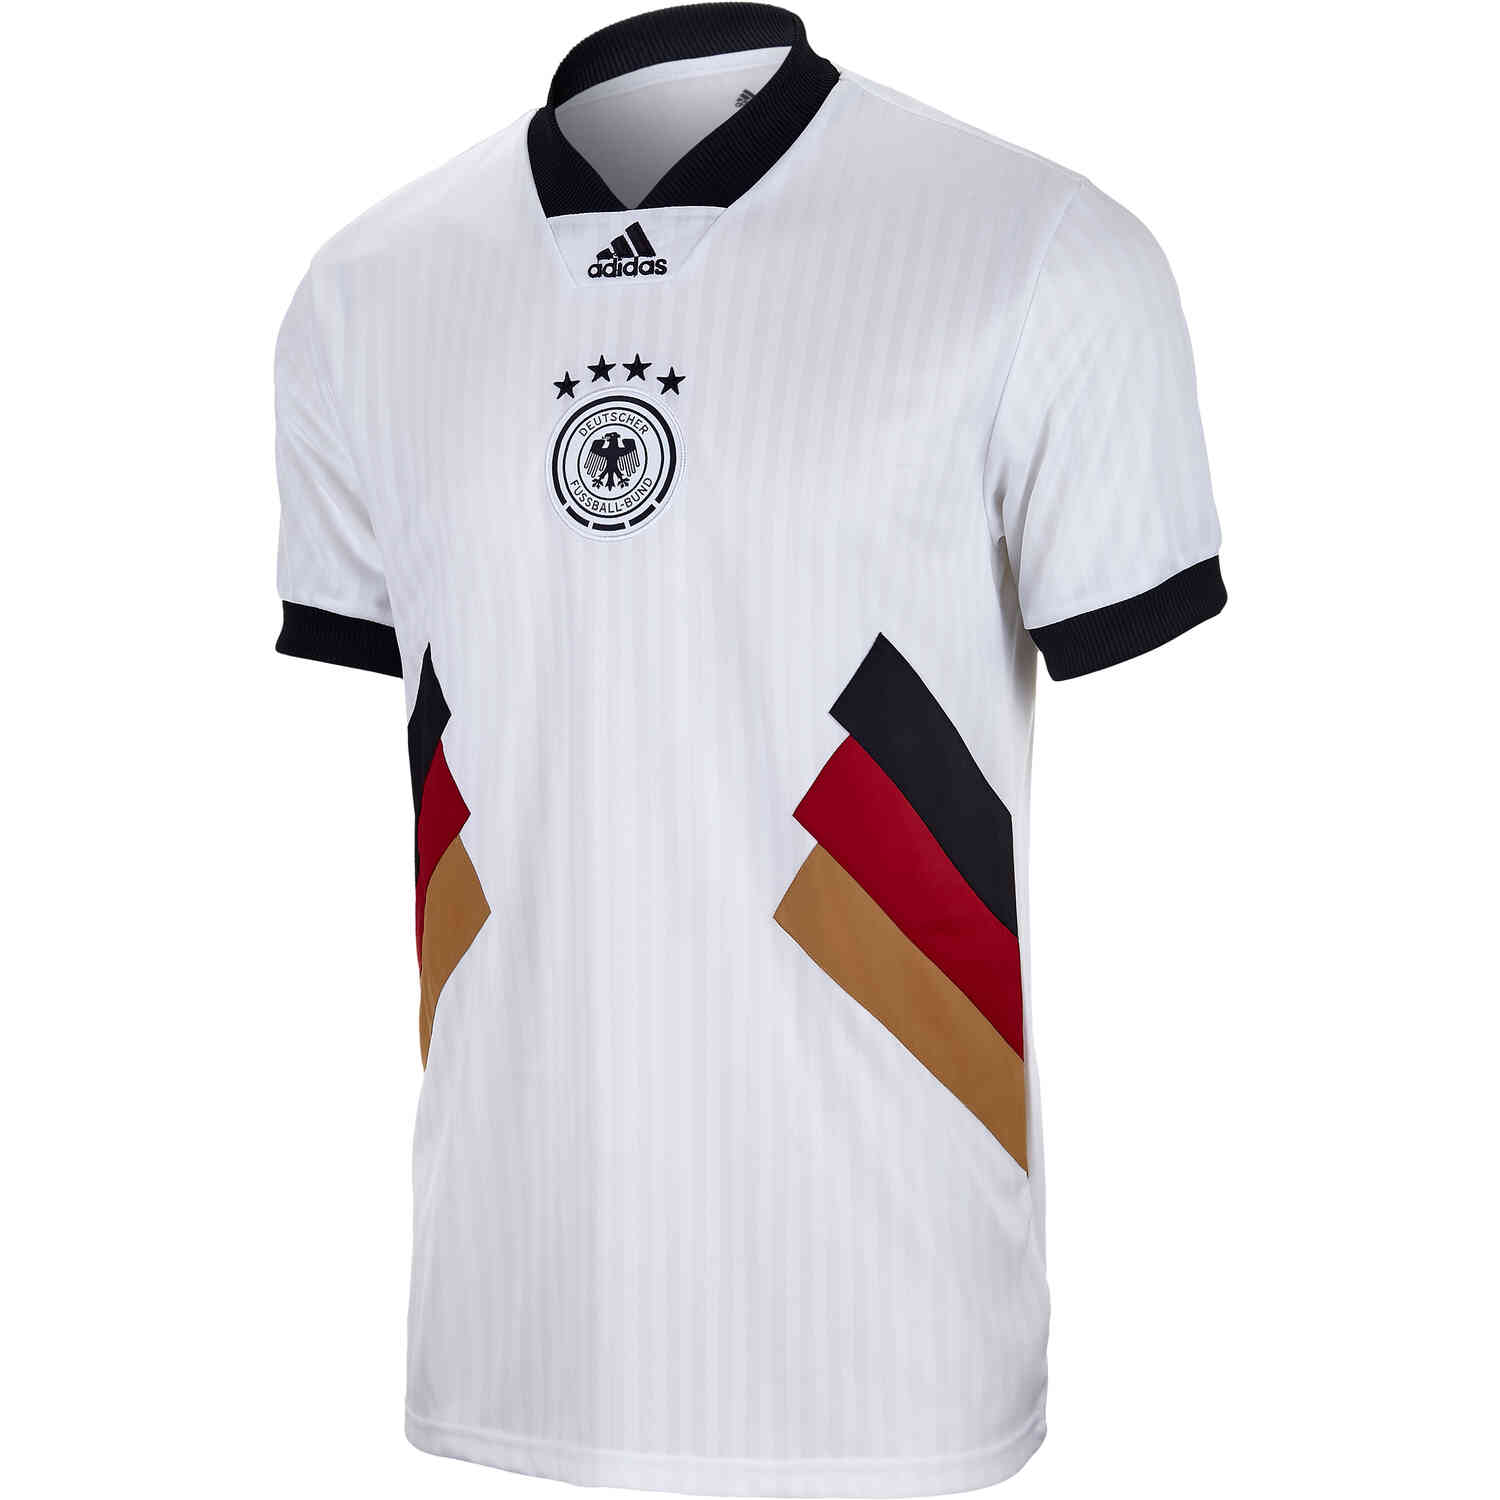 Germany Icons Jersey White/Black - SoccerPro